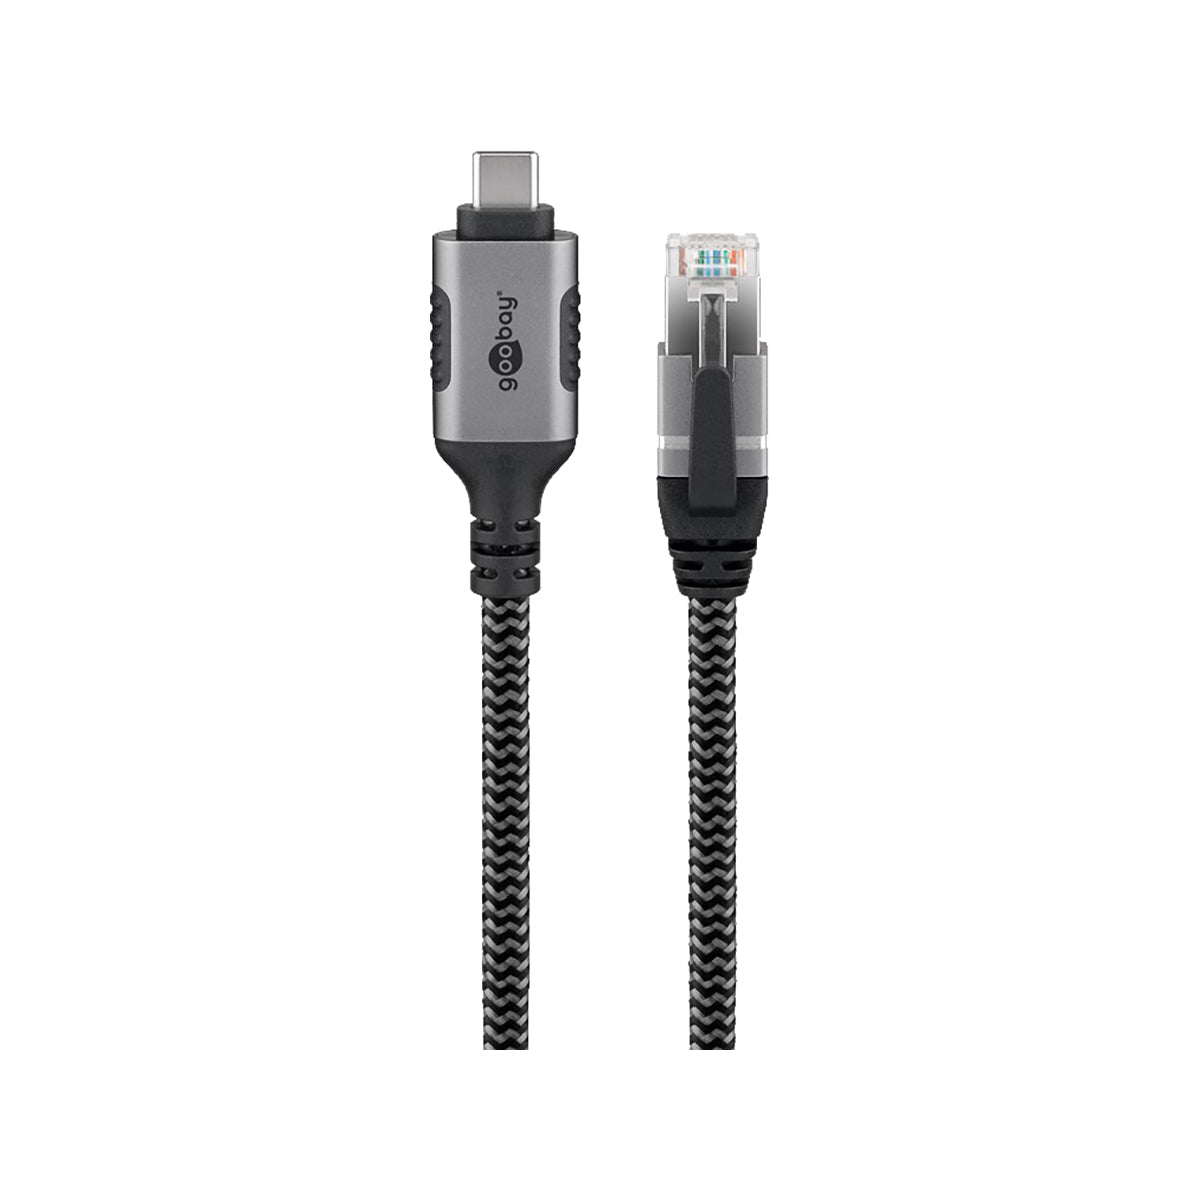 GooBay USB-C™ 3.1 to RJ45 Ethernet Cable 15m for Laptop/Tablet - Black